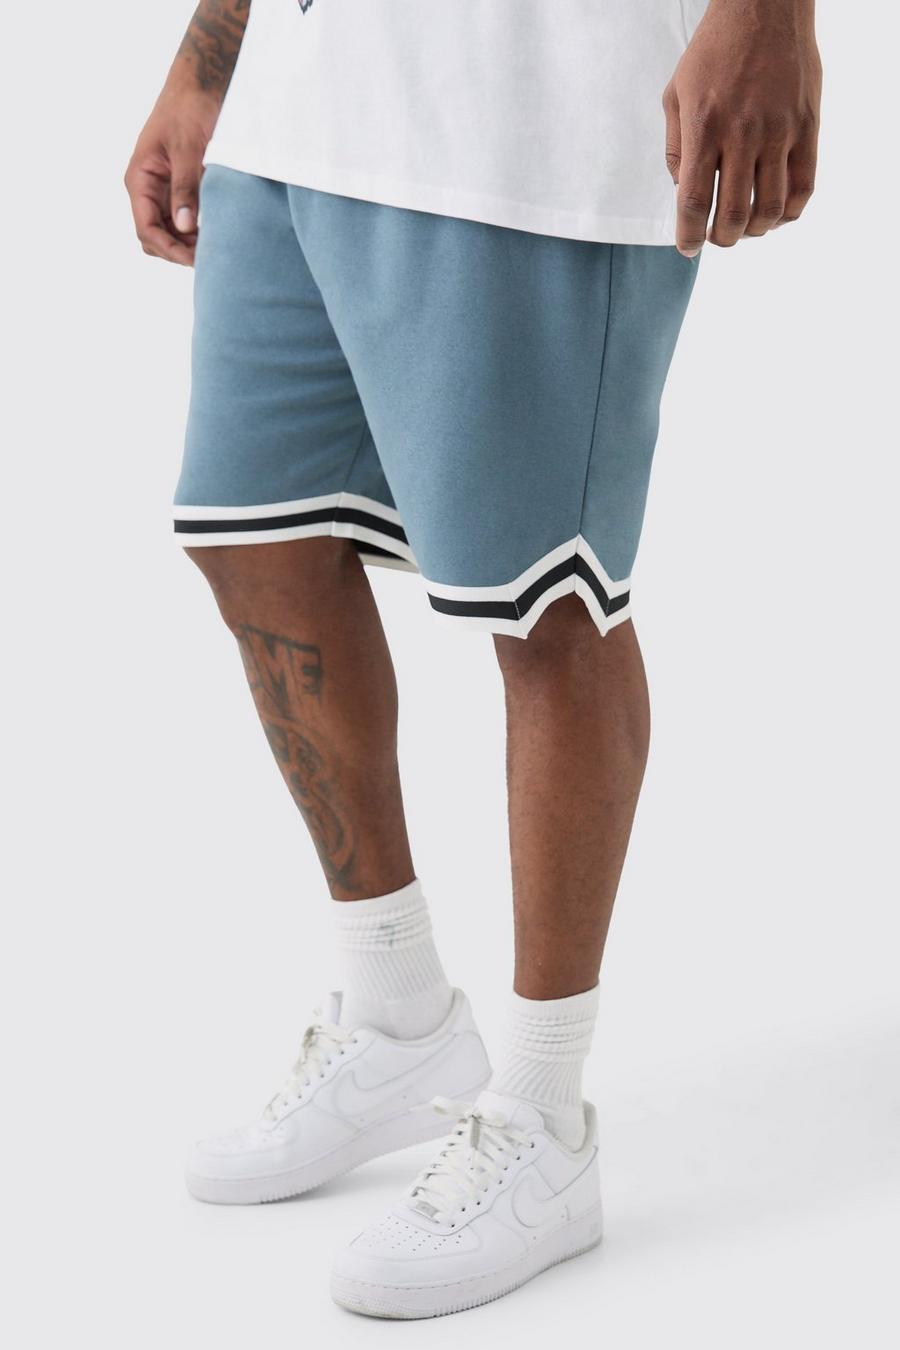 Pantalón corto Plus holgado de largo medio color pizarra estilo baloncesto, Slate